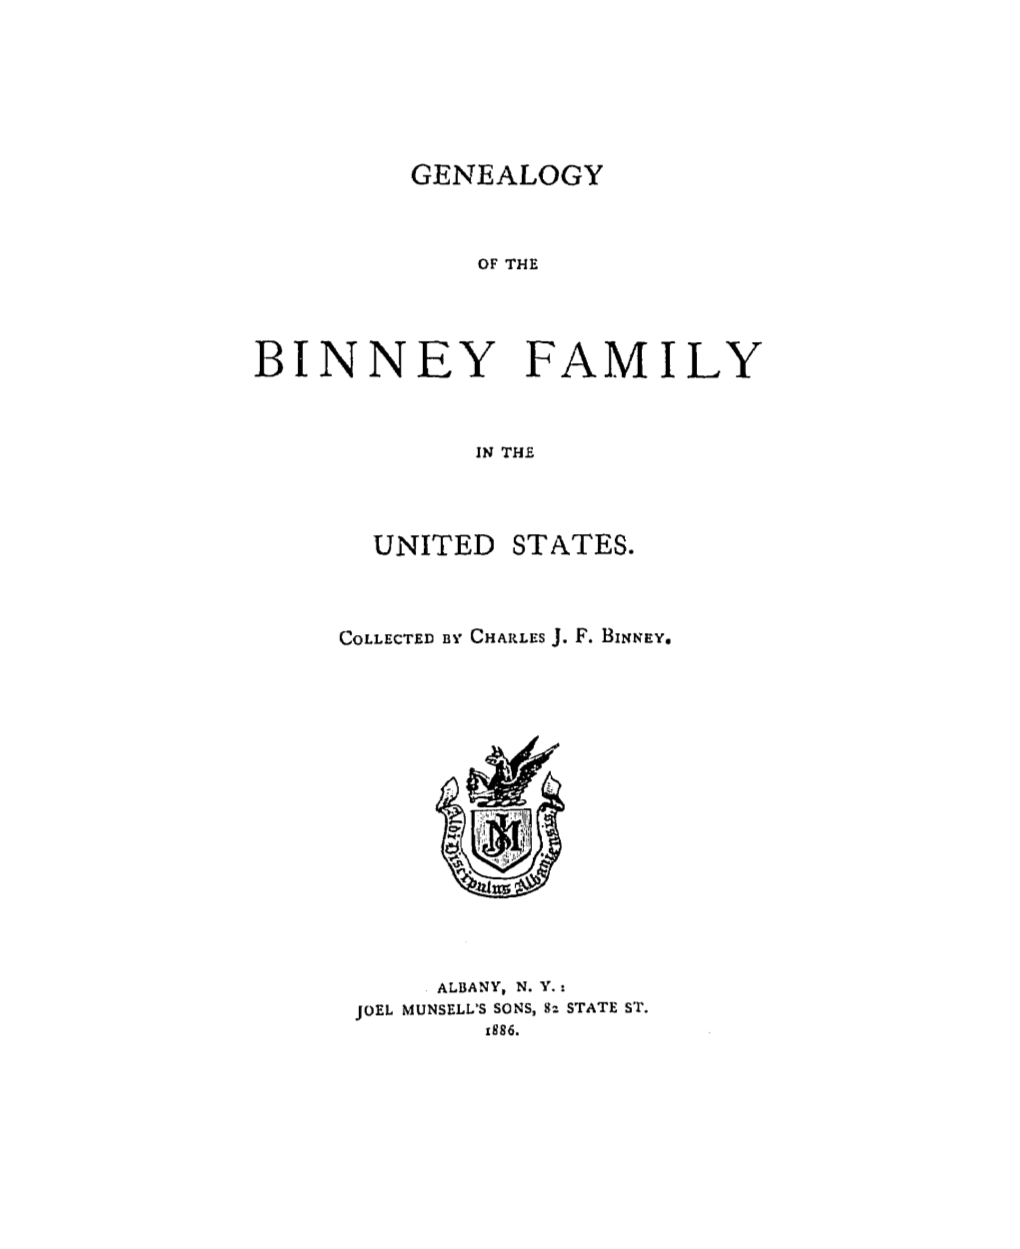 Binney Family